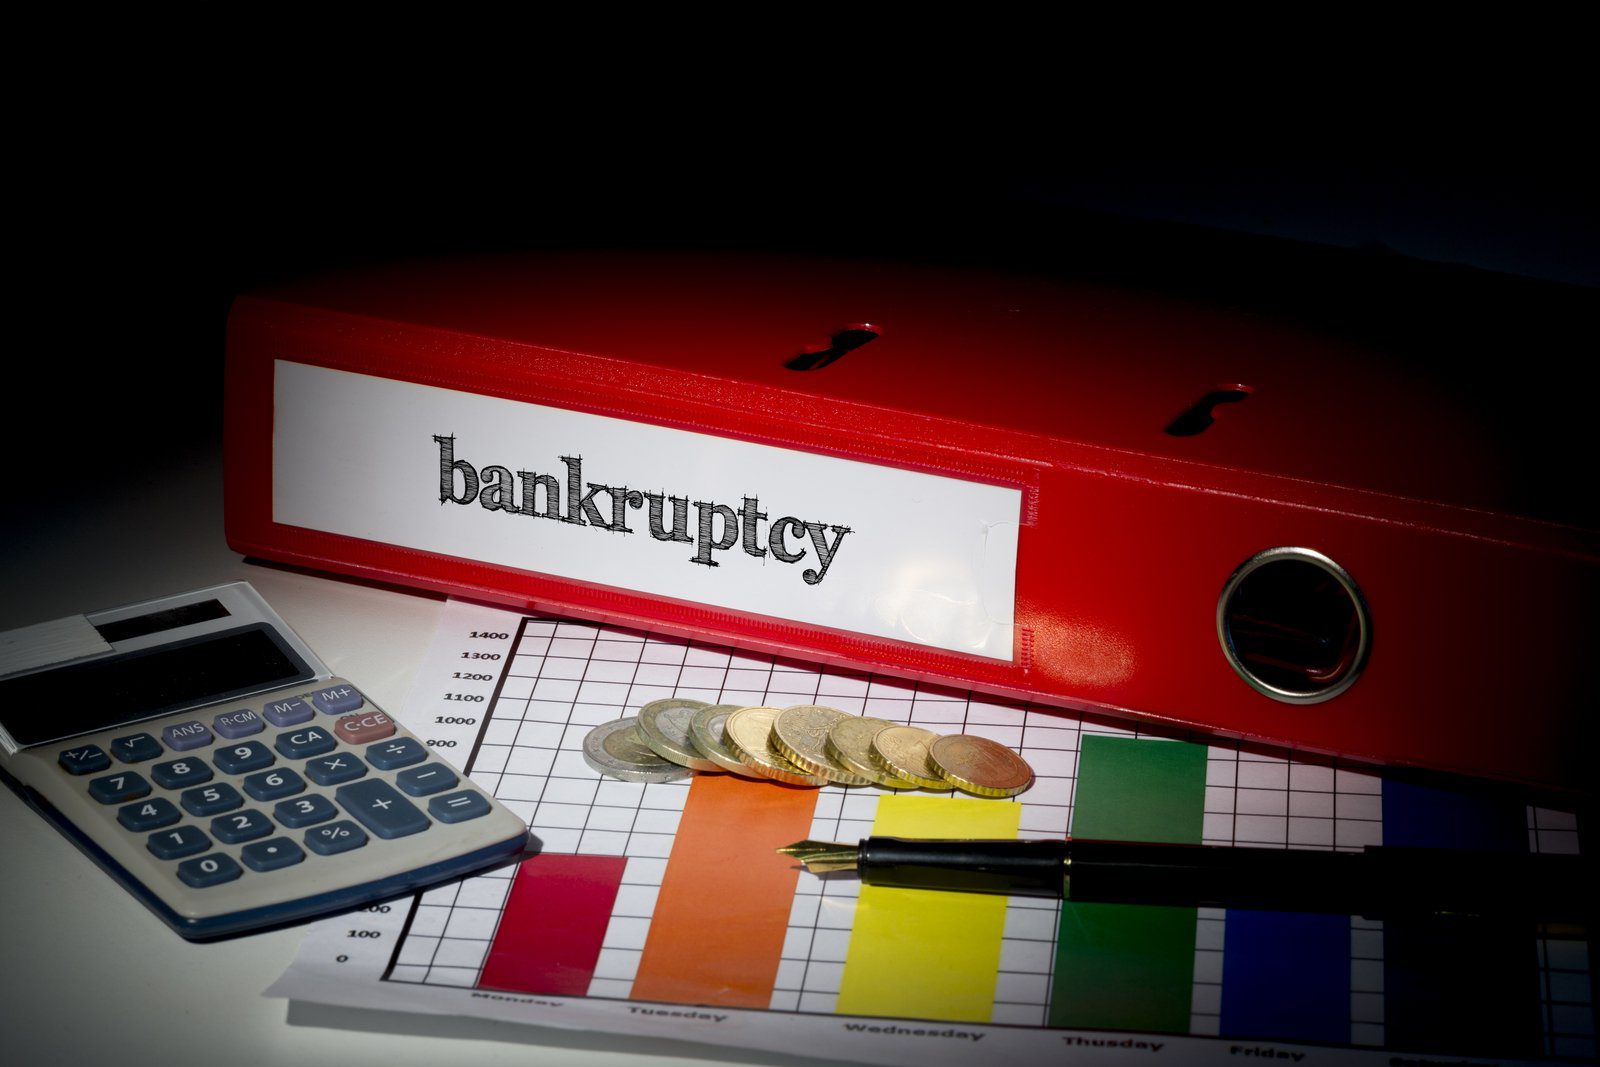 bankruptcy red business binder